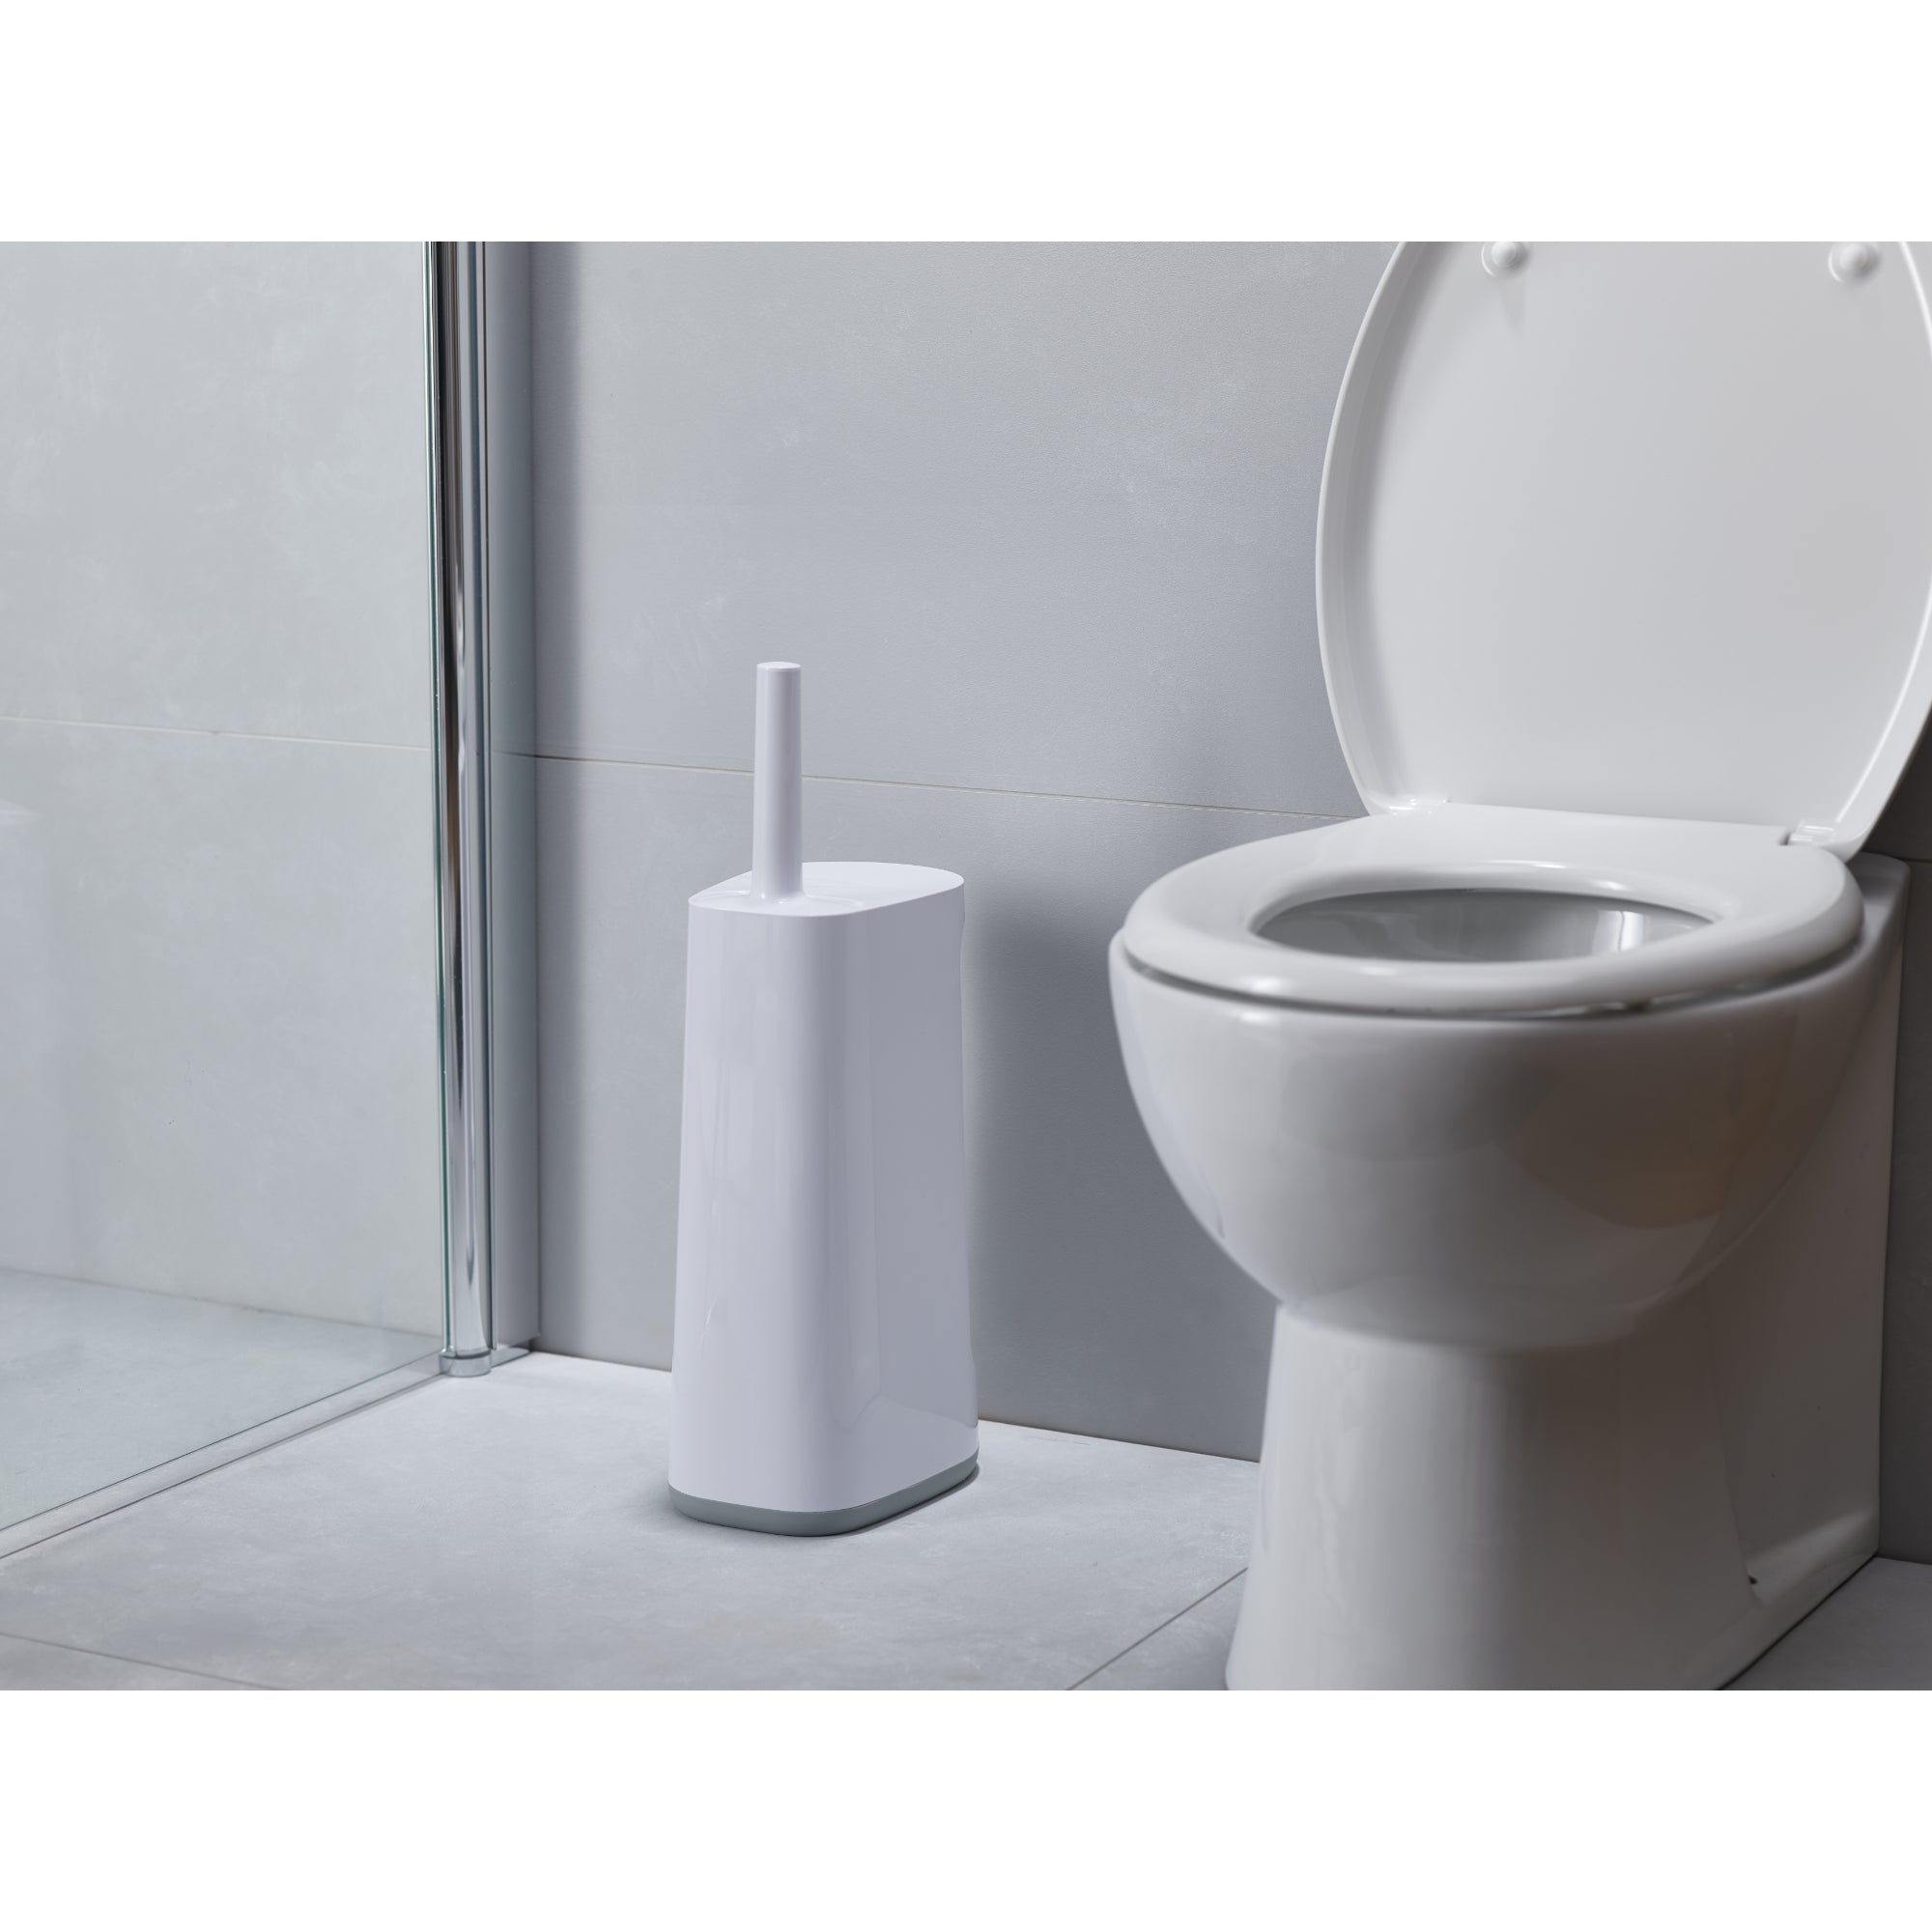 Flex Store Toilet Brush - Grey/White